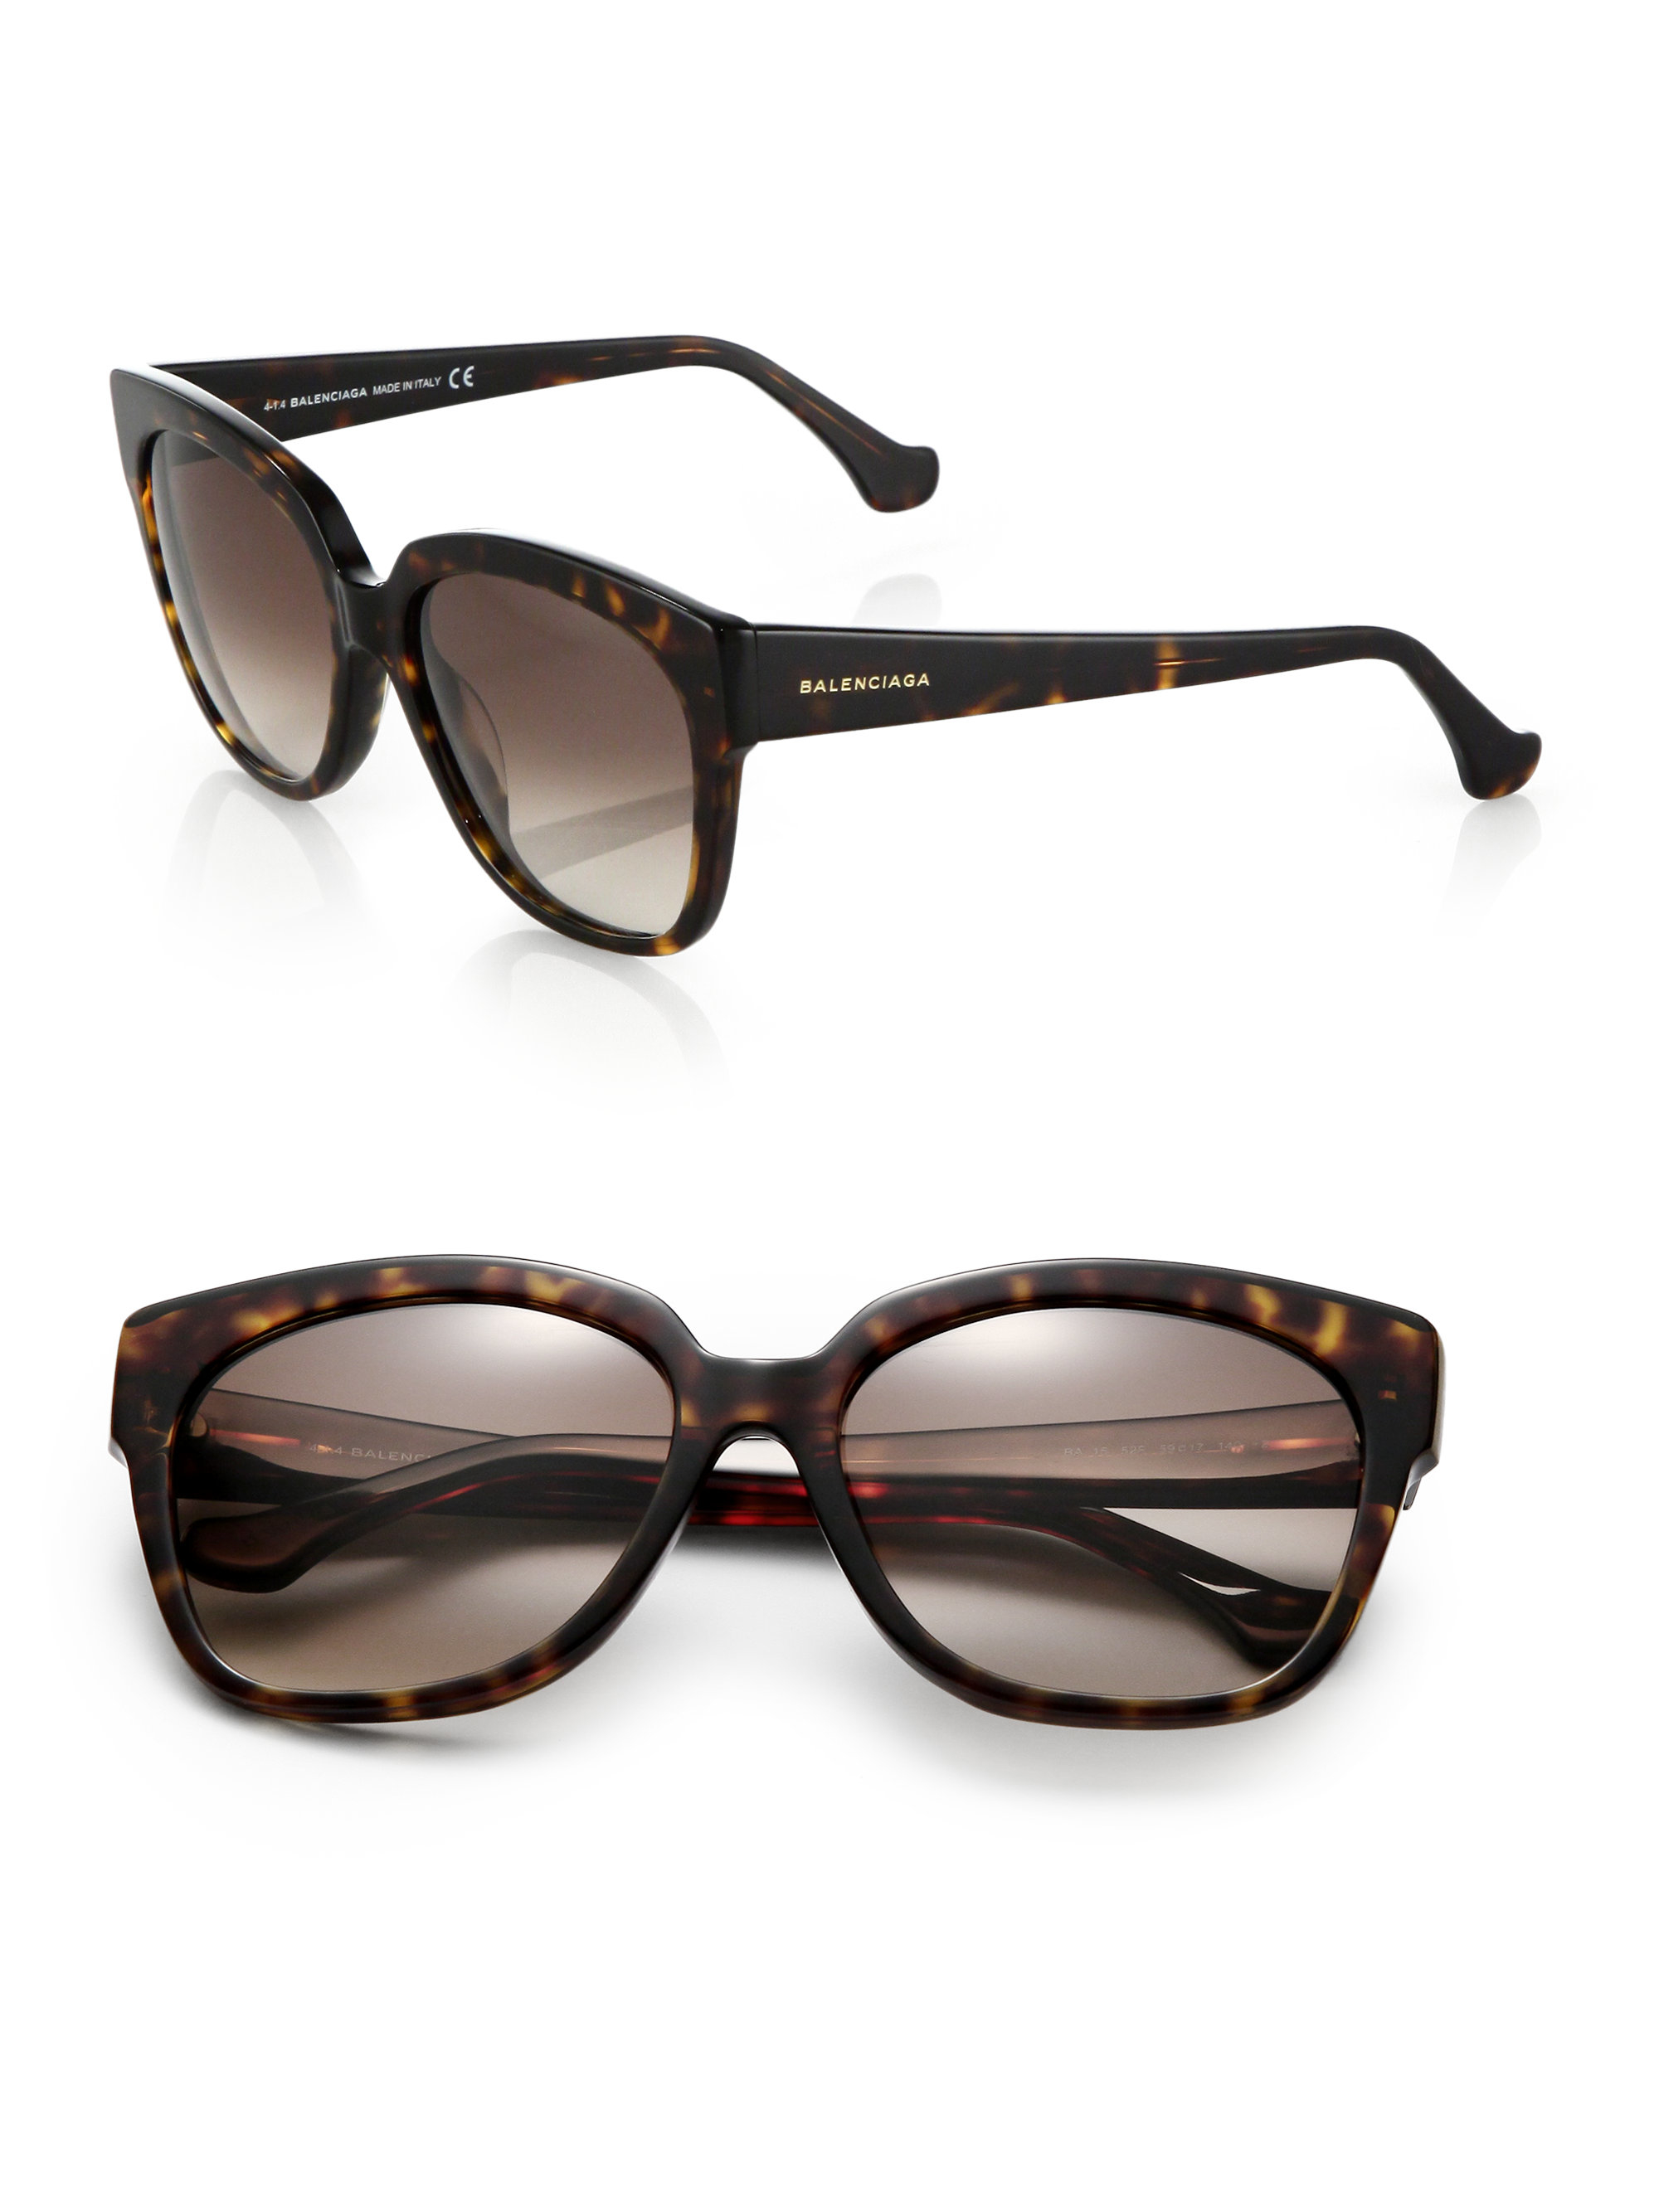 Balenciaga 59mm Tortoiseshell Acetate Square Sunglasses in Brown | Lyst